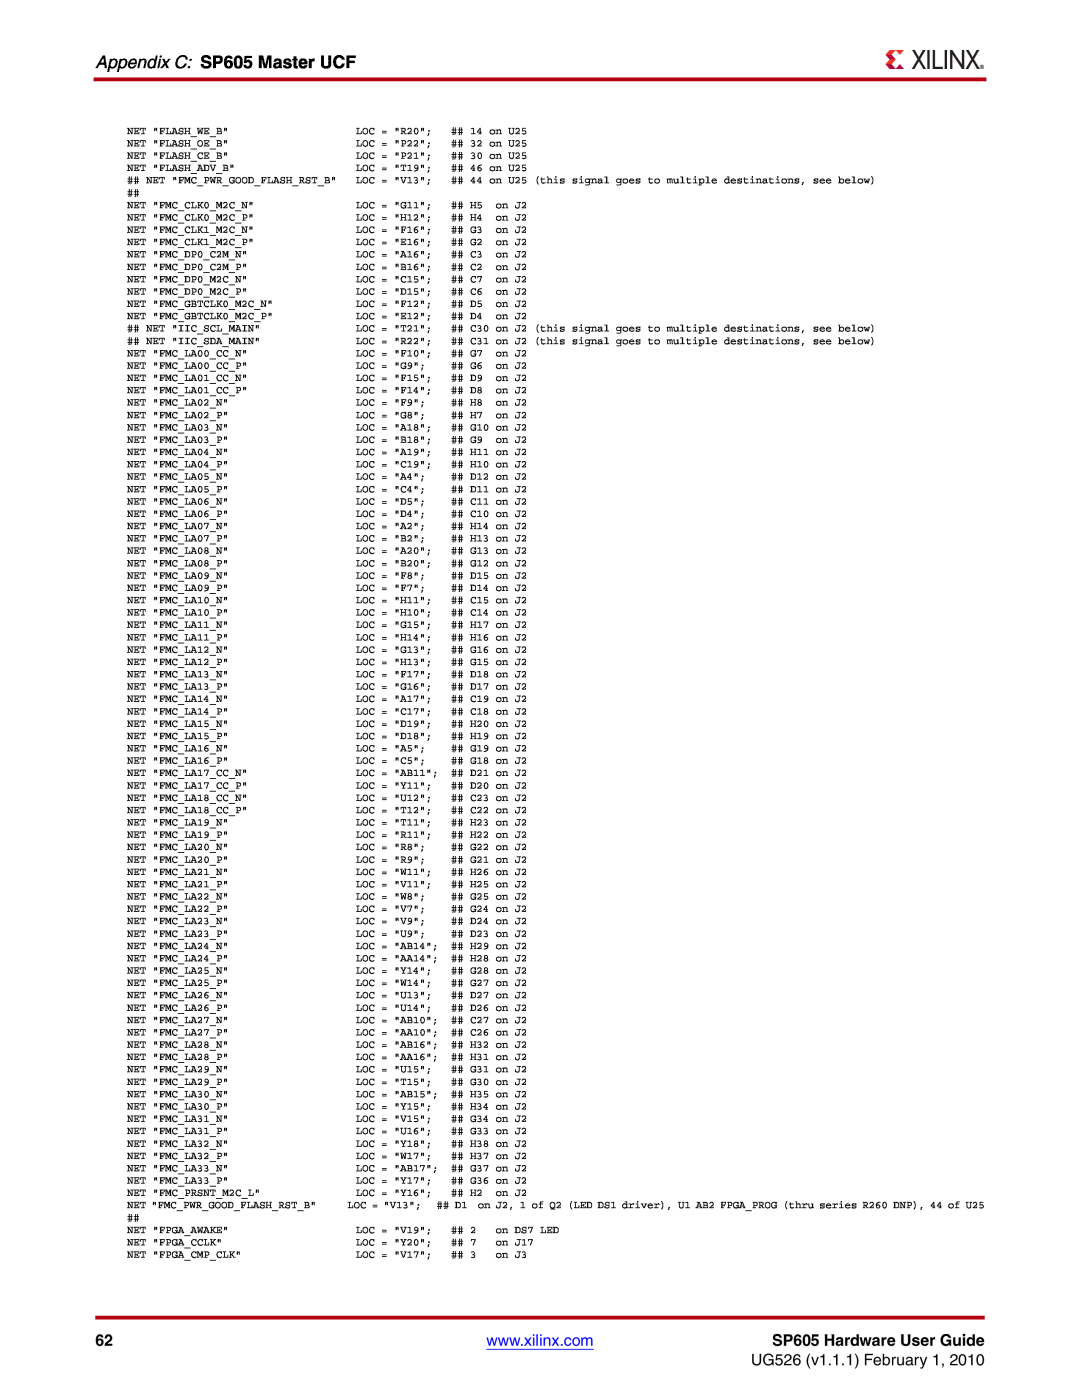 Xilinx manual Appendix C SP605 Master UCF, SP605 Hardware User Guide, UG526 v1.1.1 February 1 